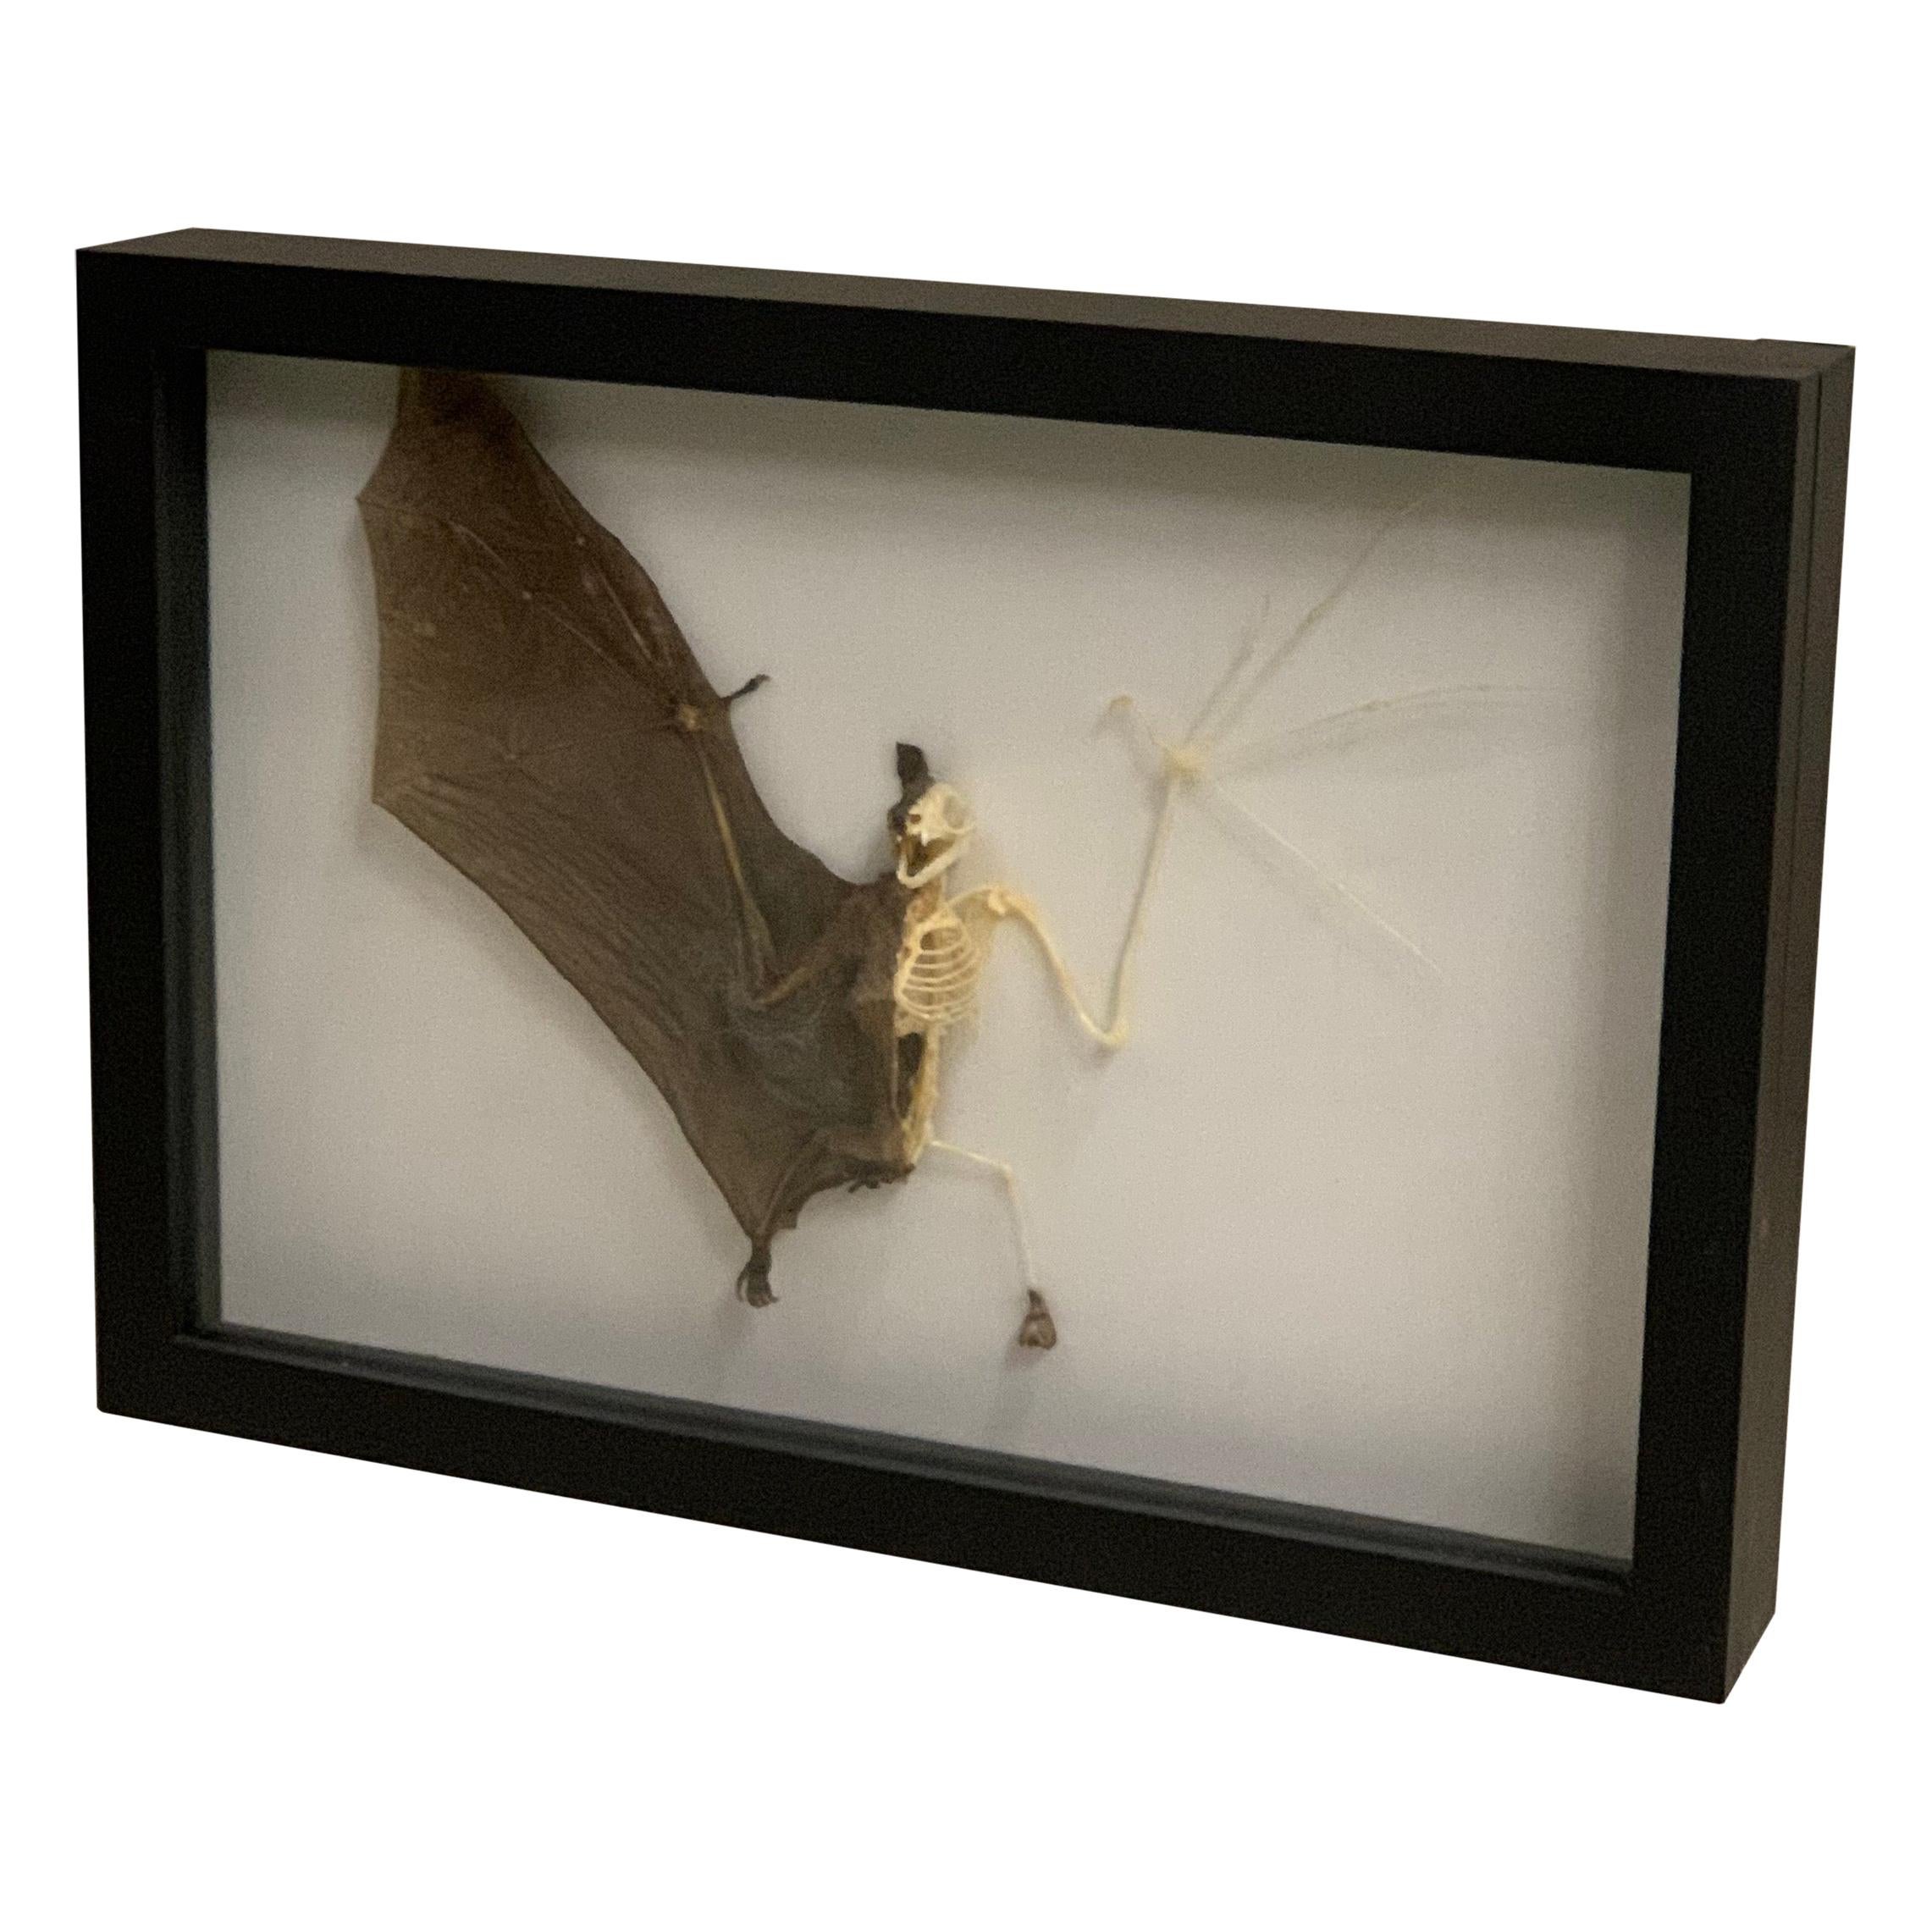 Taxidermy, Asian Fruit Bat, Half Skeleton in Display Box